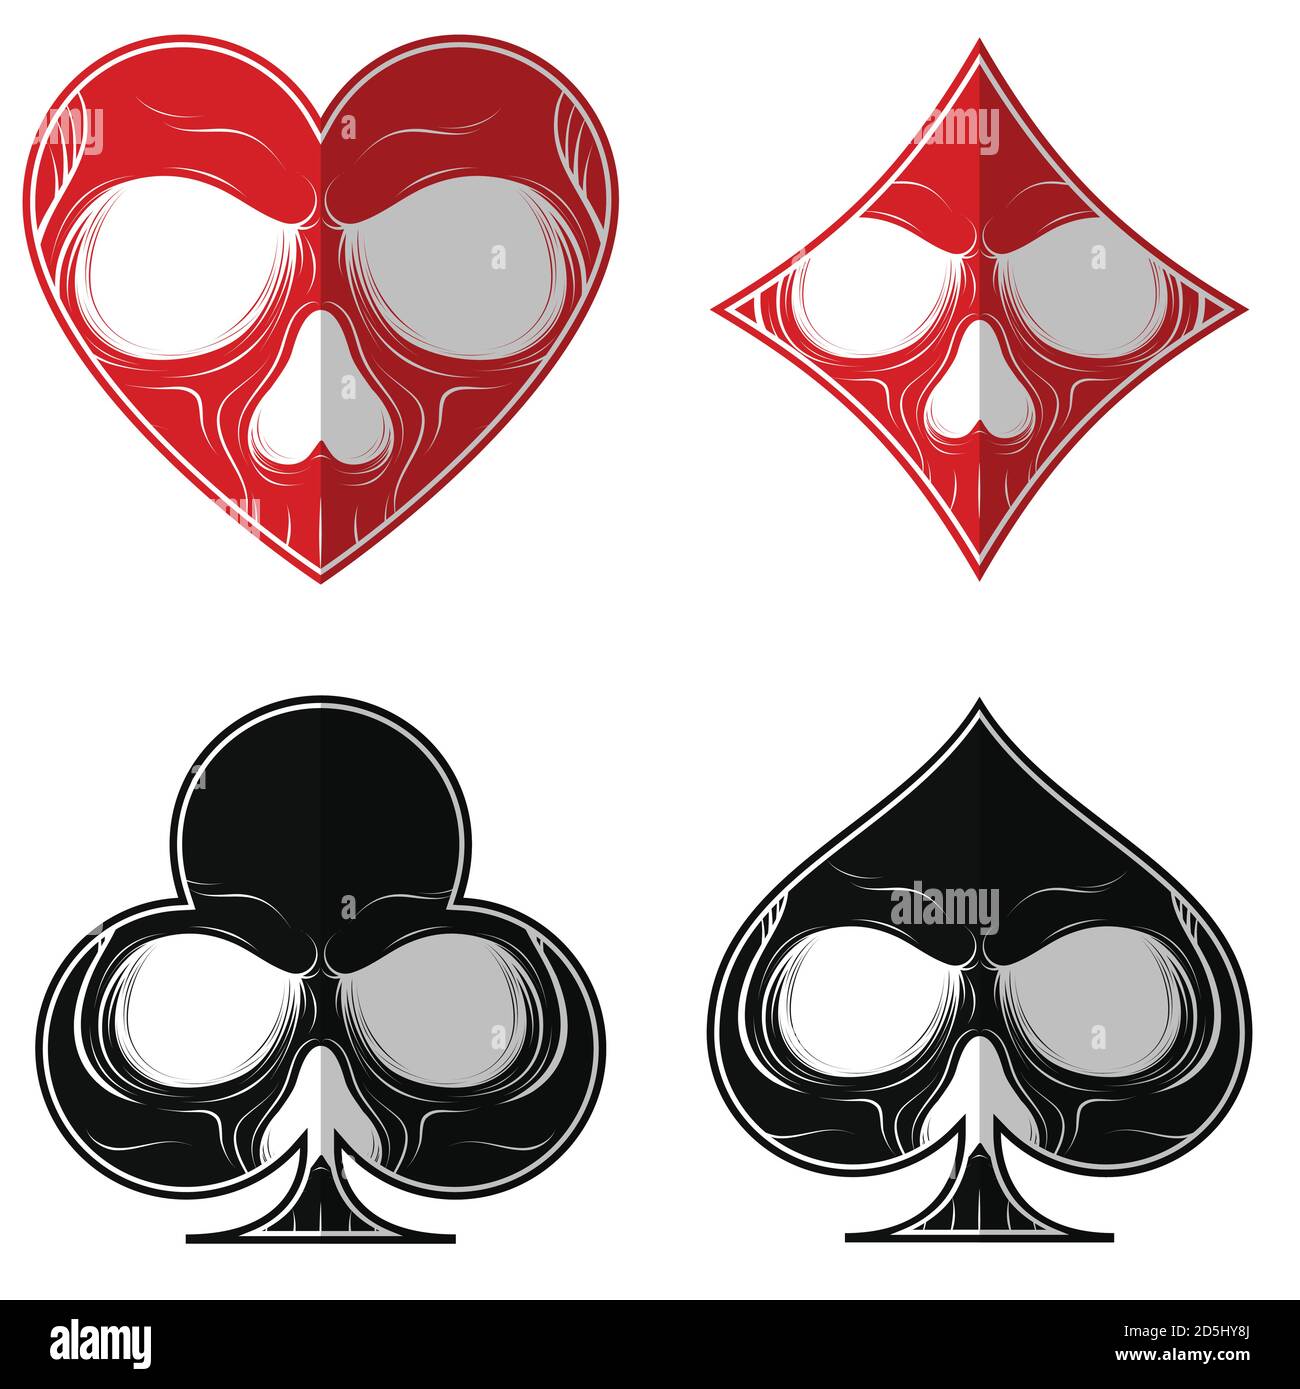 Vector design, skull with the four poker symbols, heart diamond ace clover, all on white background. Stock Vector